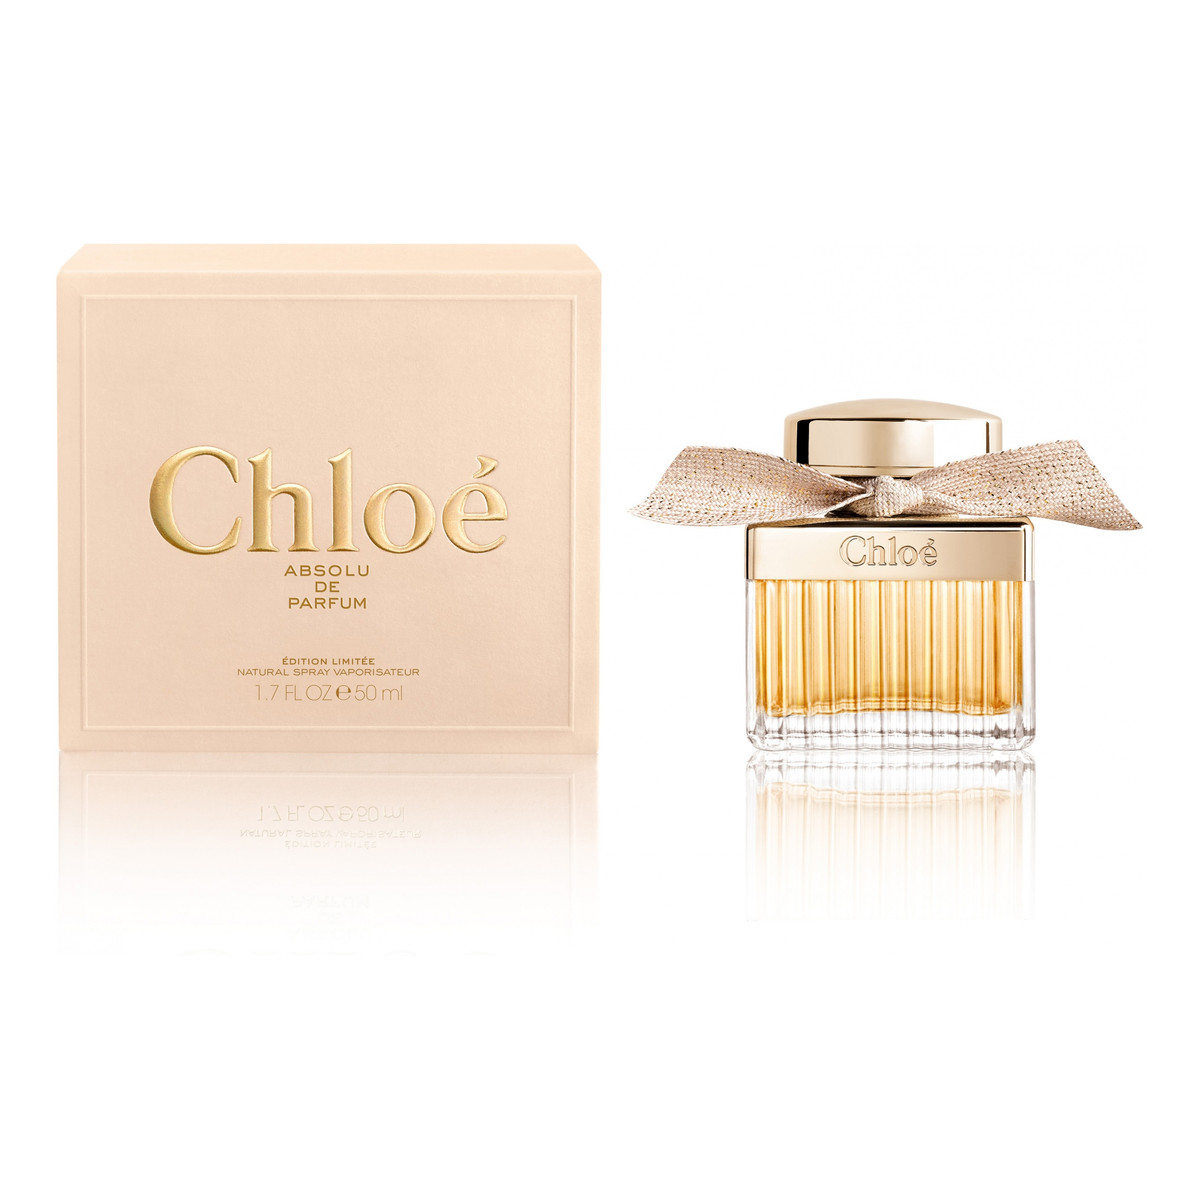 Chloe Absolu De Parfum woda perfumowana 50ml